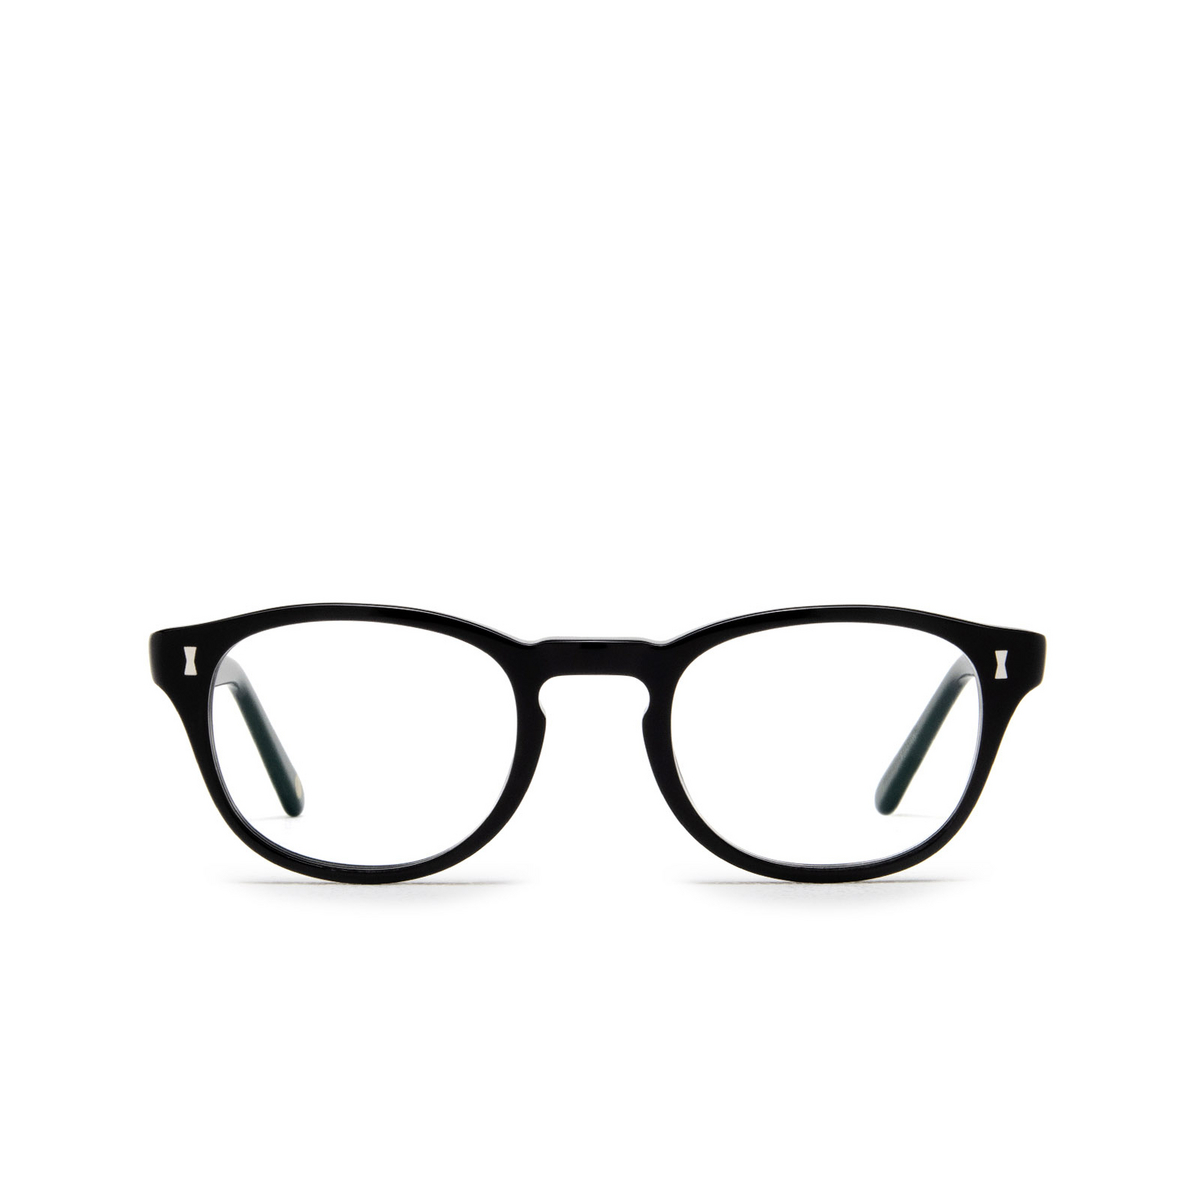 Cubitts WICKLOW Eyeglasses WIC-R-BLA Black - front view